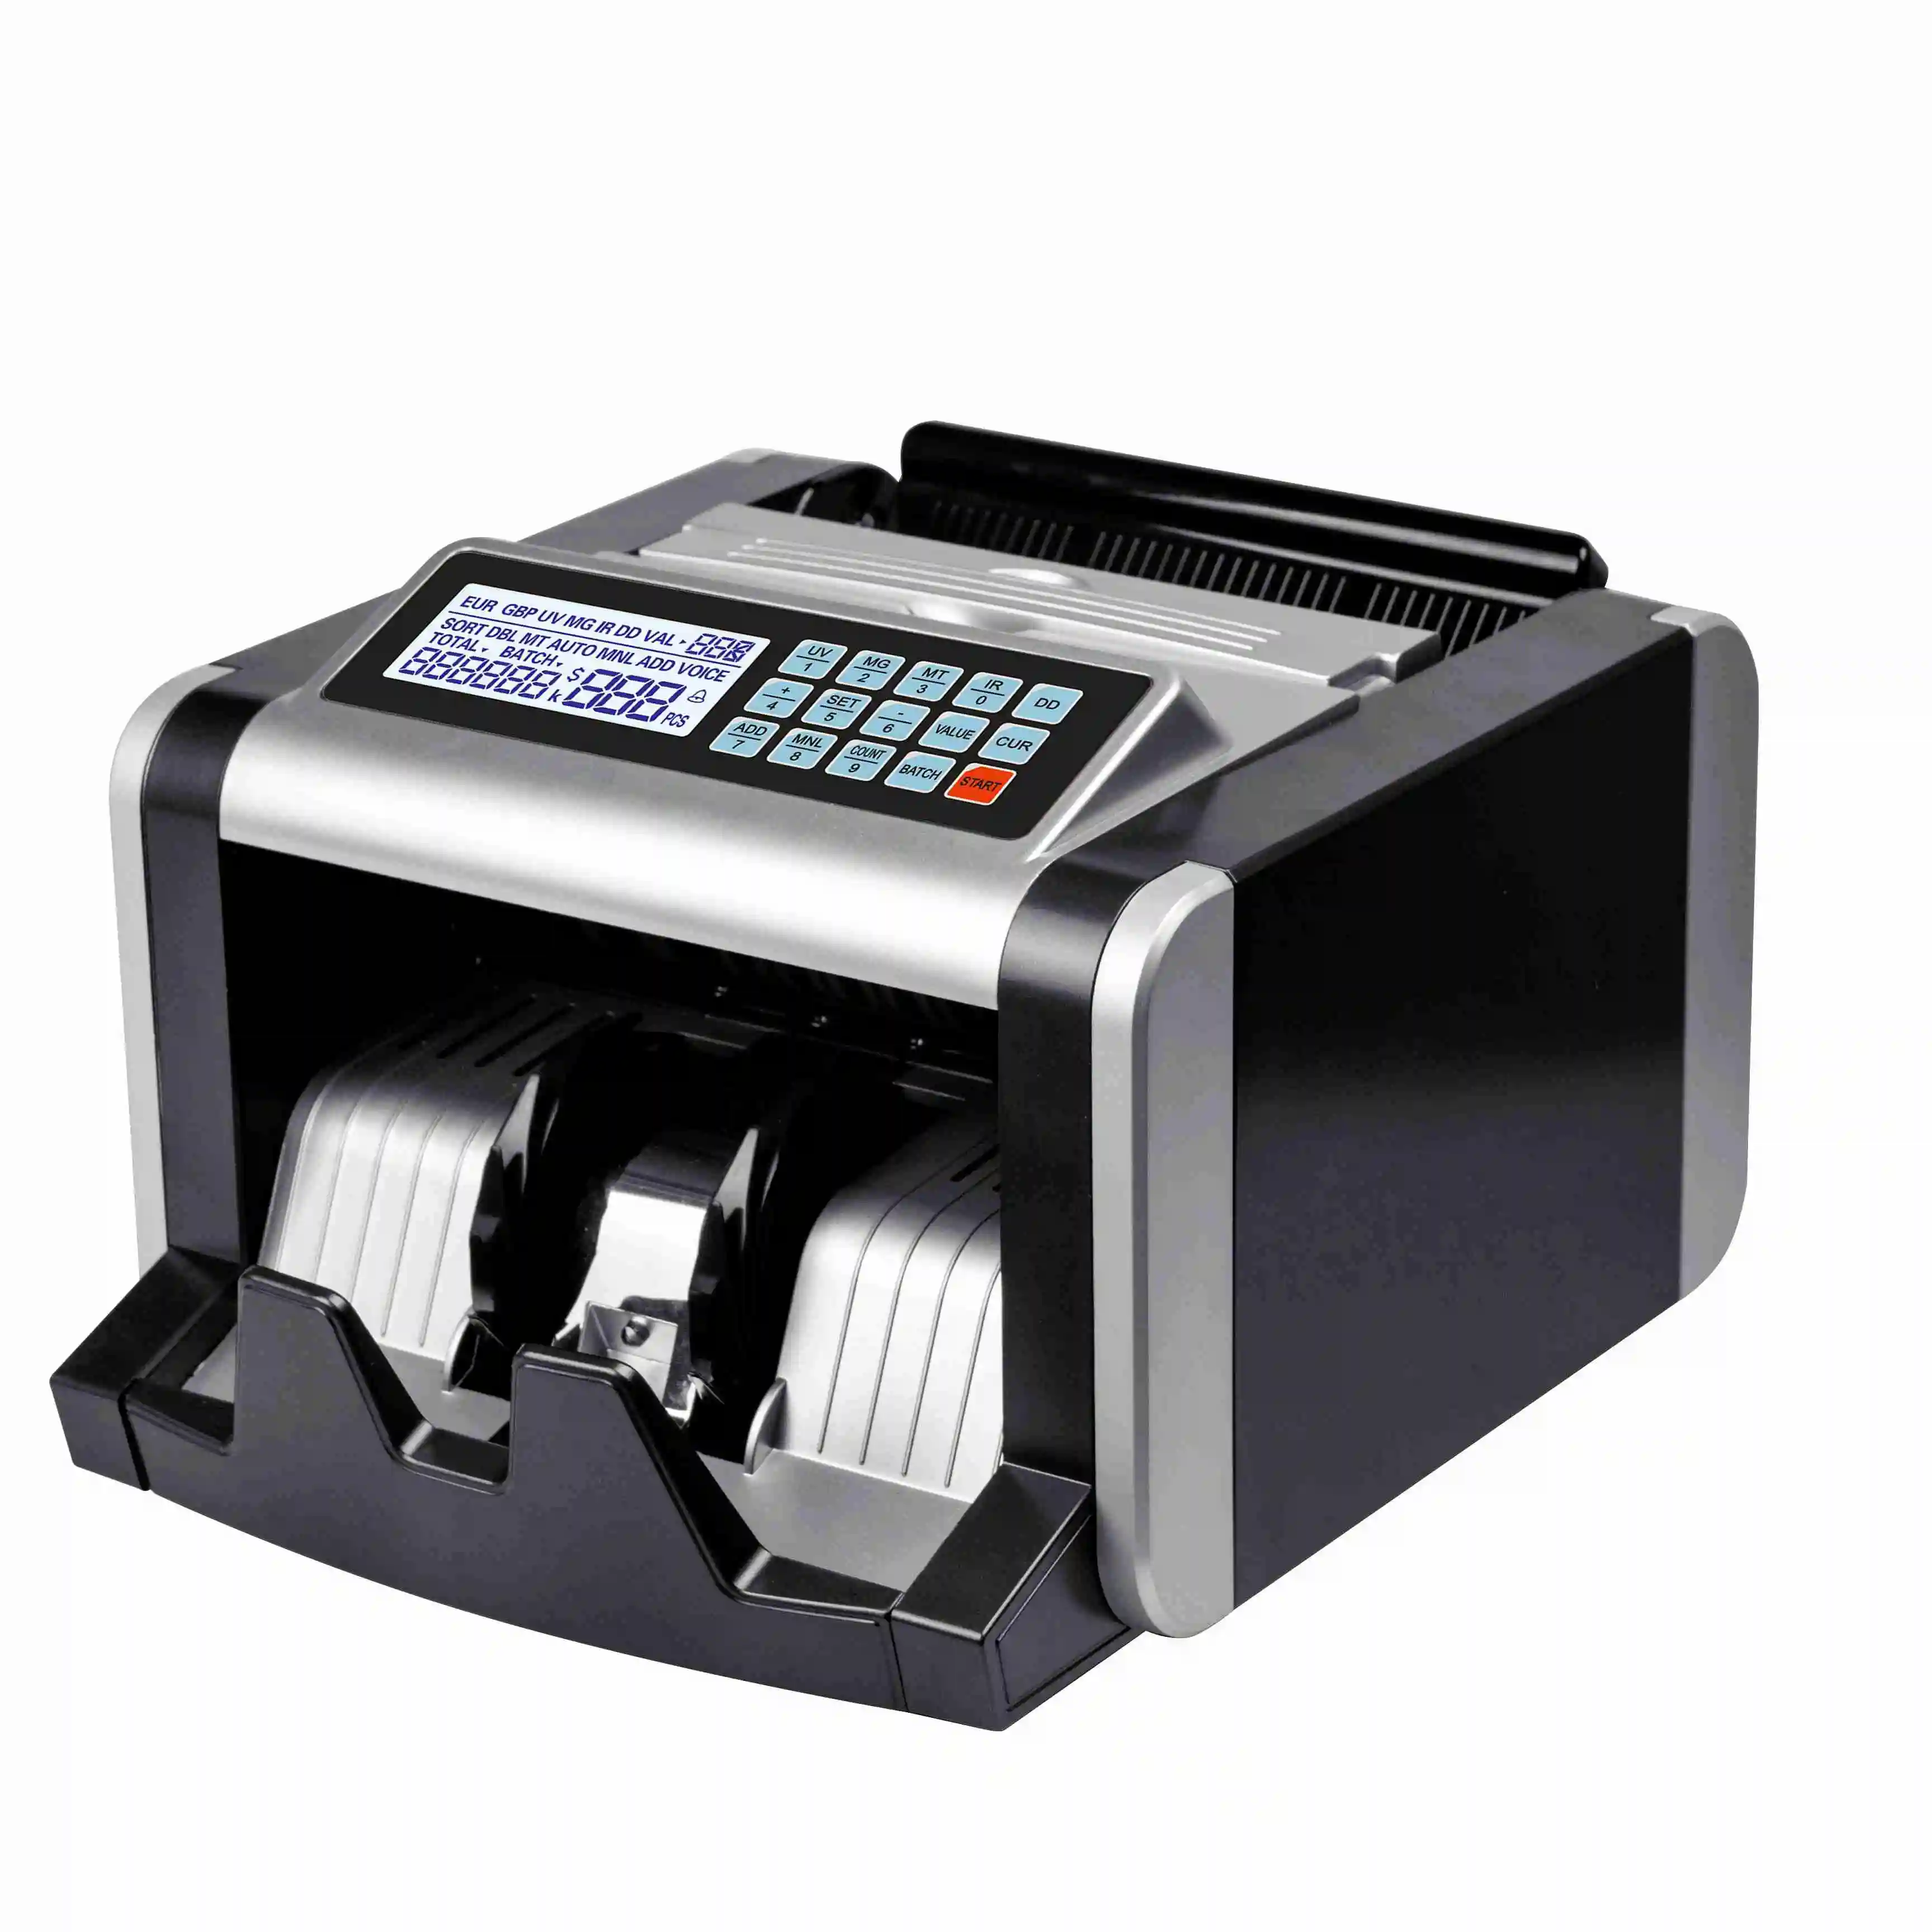 Auto Bill Bank Notes เครื่องตรวจสอบเงินเครื่องนับสกุลเงินพร้อมจอแสดงผล LCD สำหรับธุรกิจ